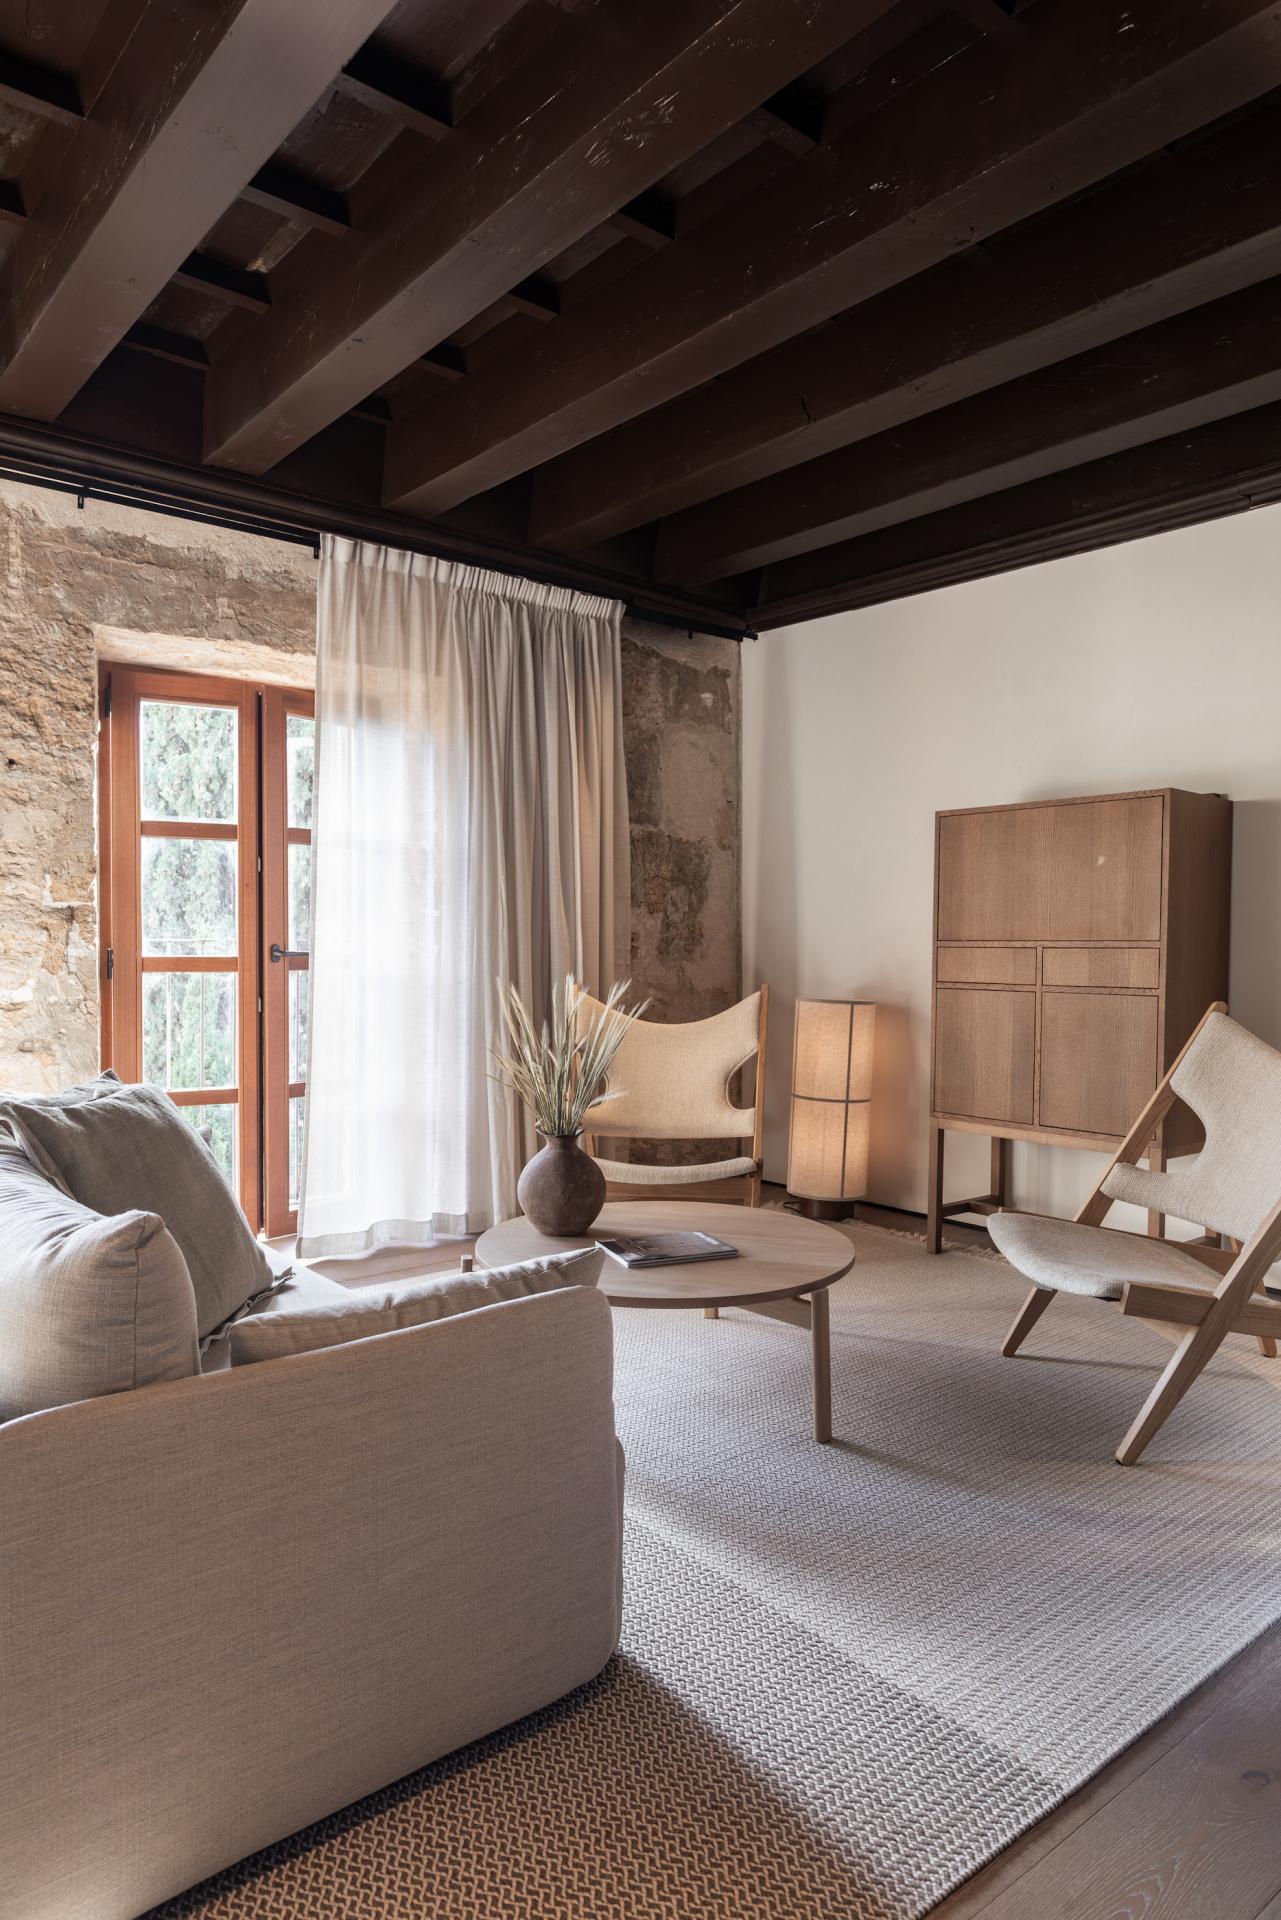 Nobis Hotel Palma: Breathing New Life Into a 12th-Century Palace